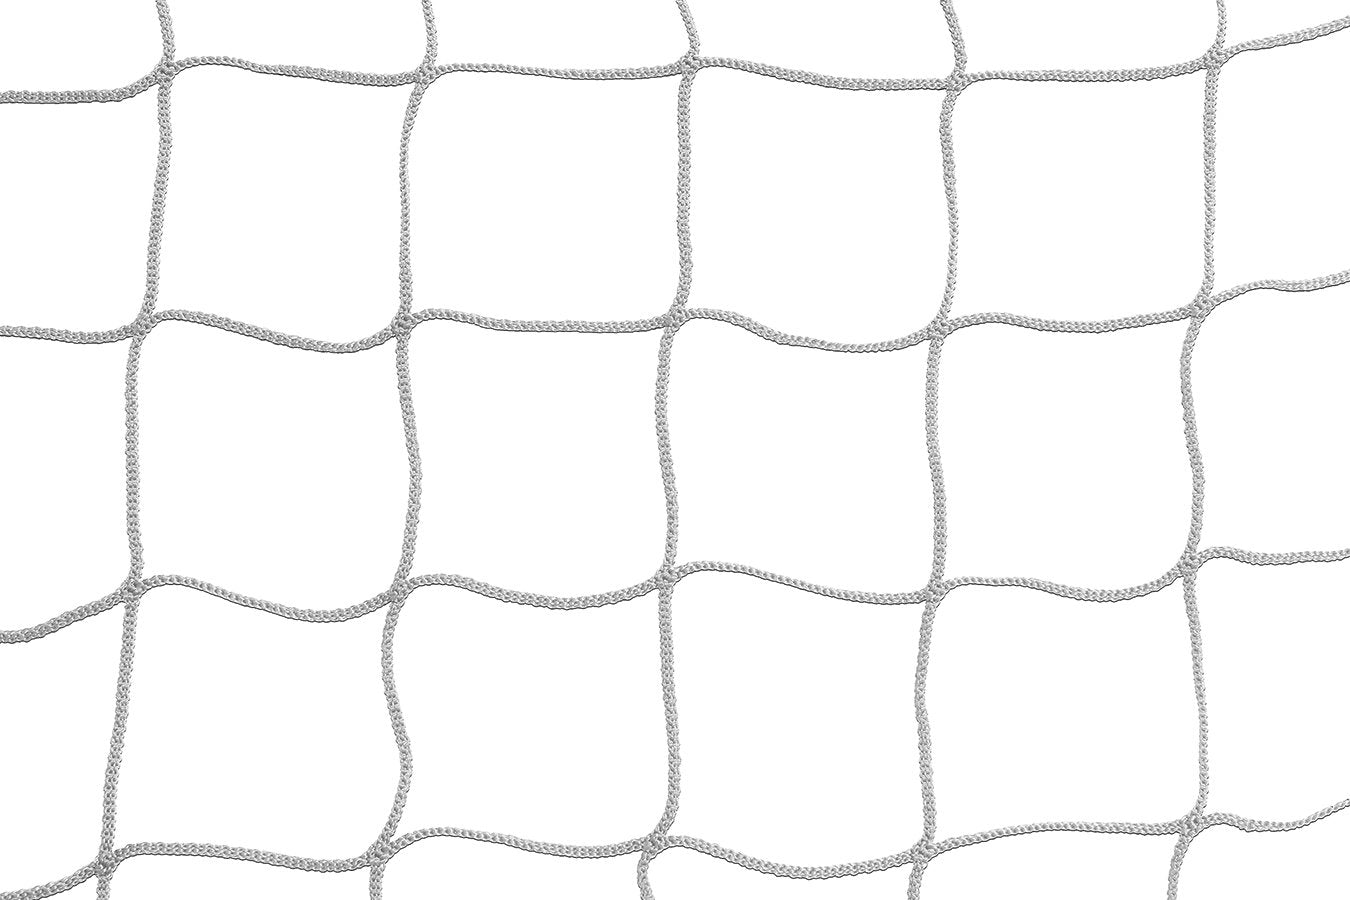 Kwik Goal Soccer Backstop Replacement Net, White